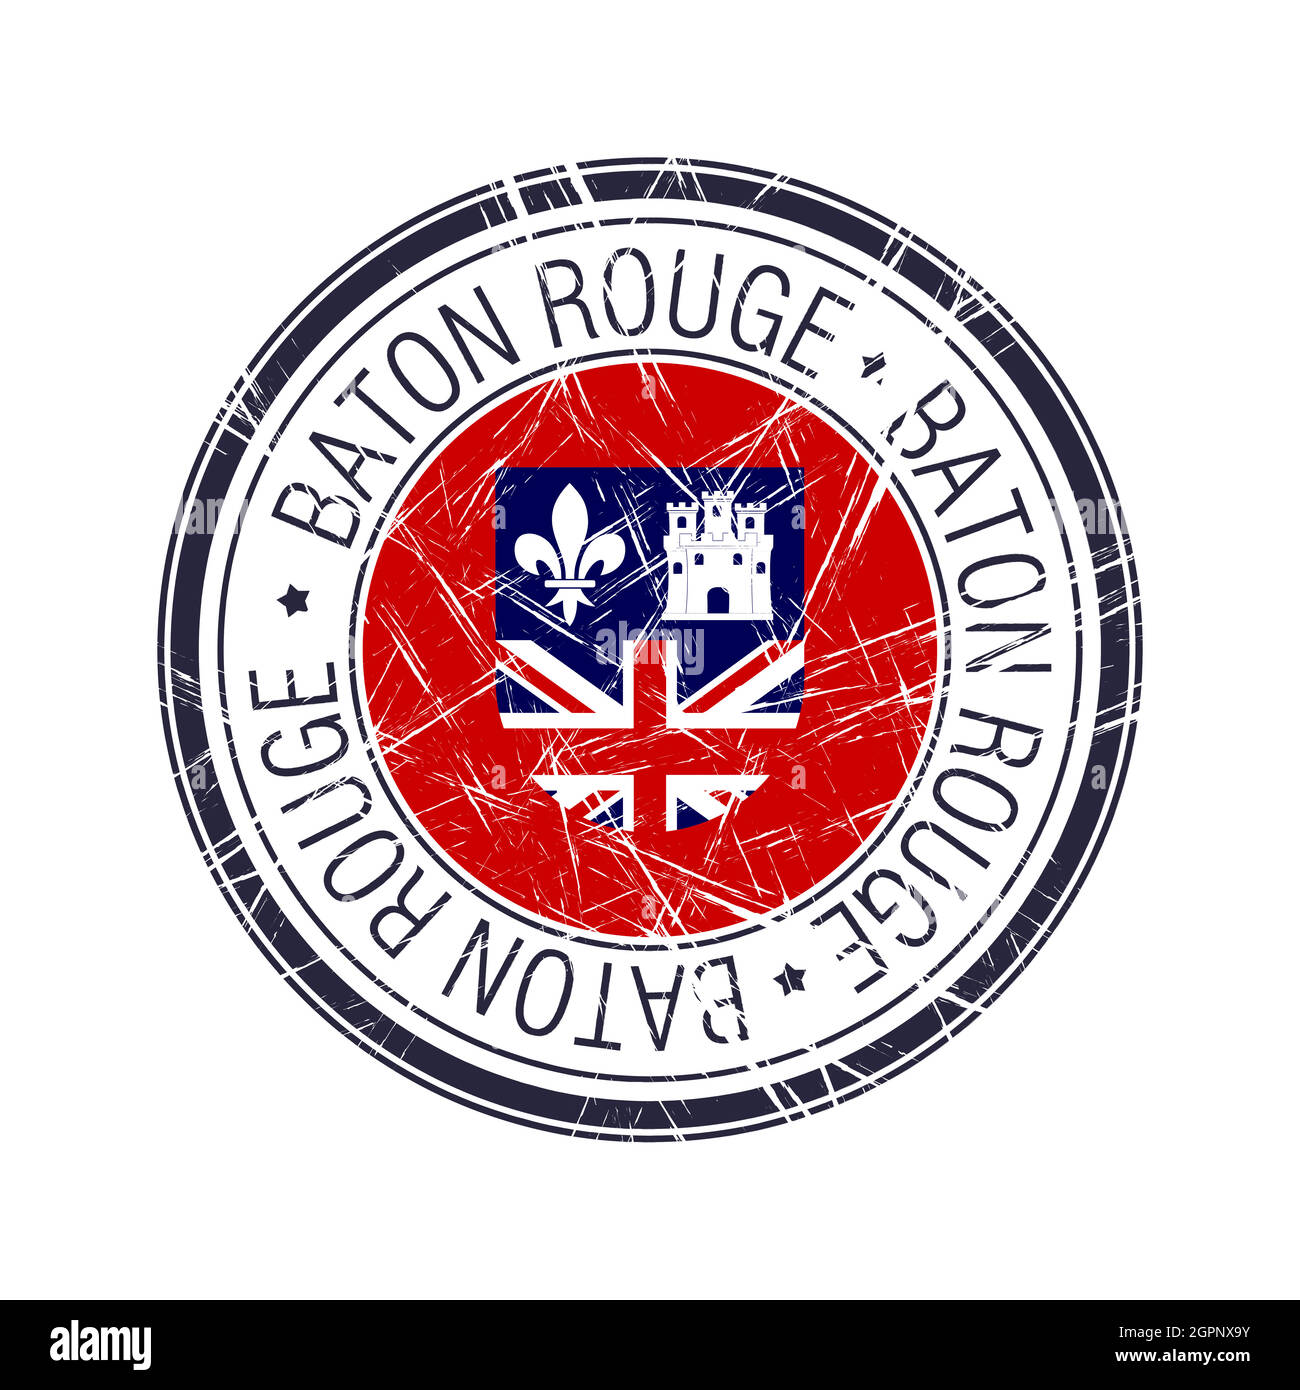 Retro New Orleans Louisiana City Flag // Vintage NOLA Grunge Emblem